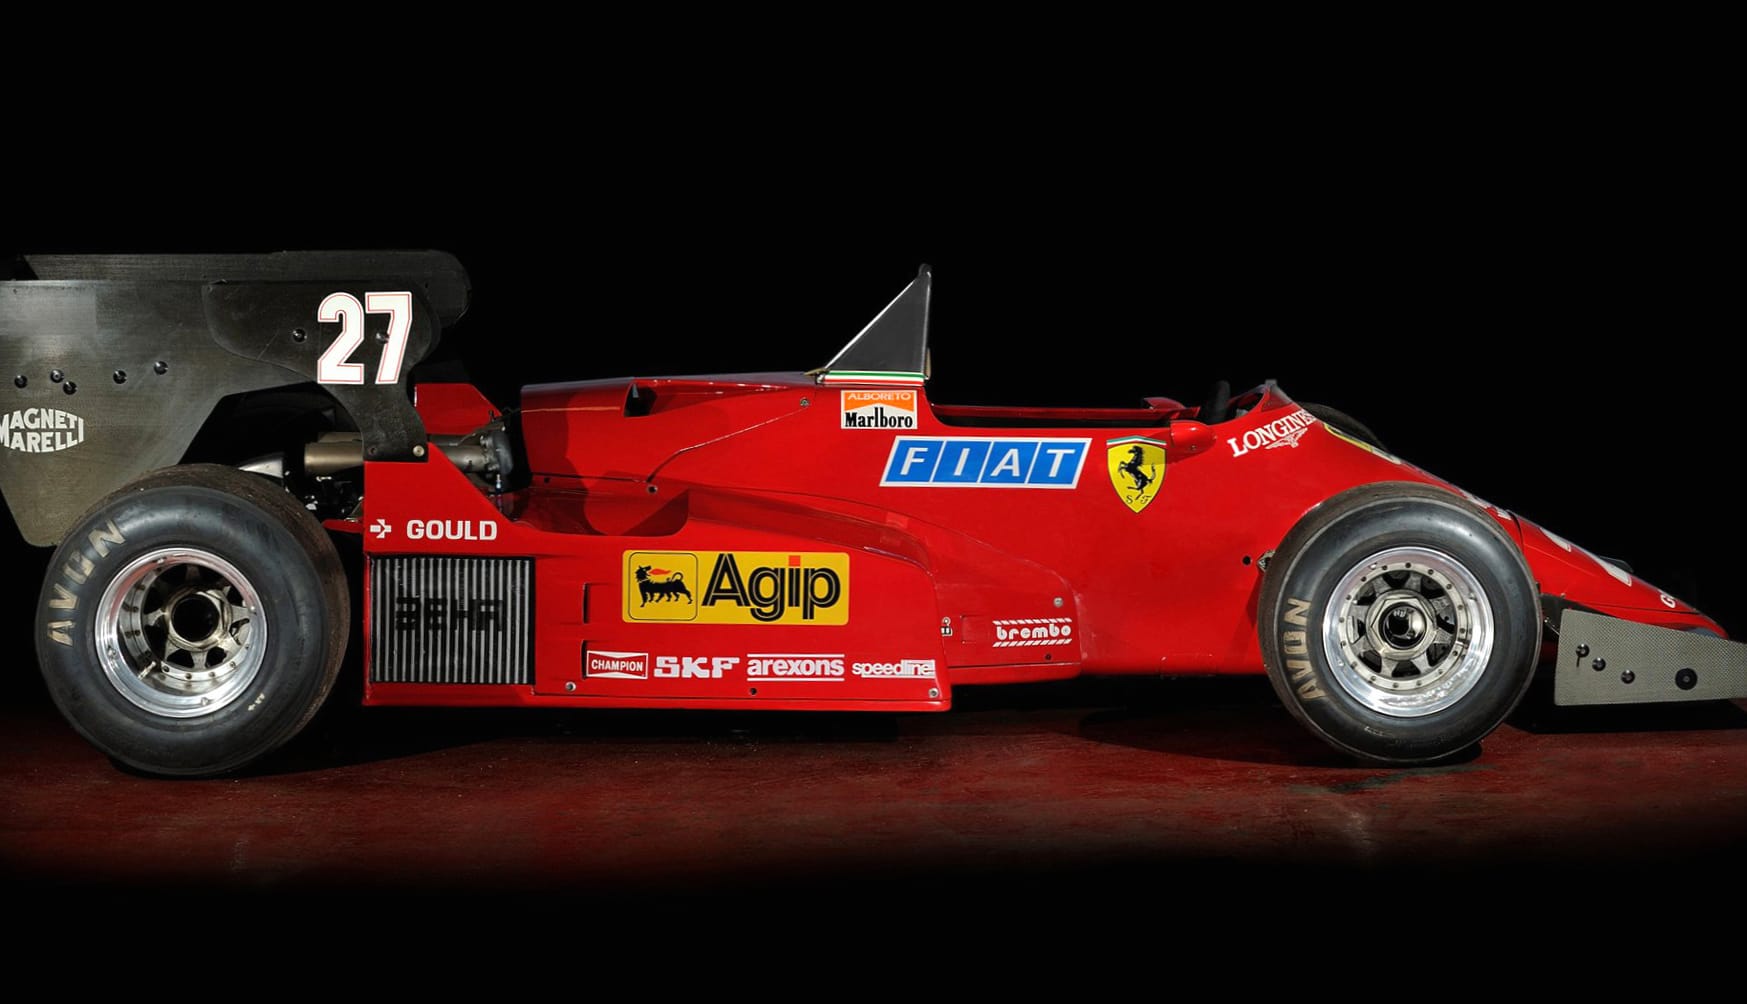 Ferrari 126 C4 at 1024 x 768 size wallpapers HD quality